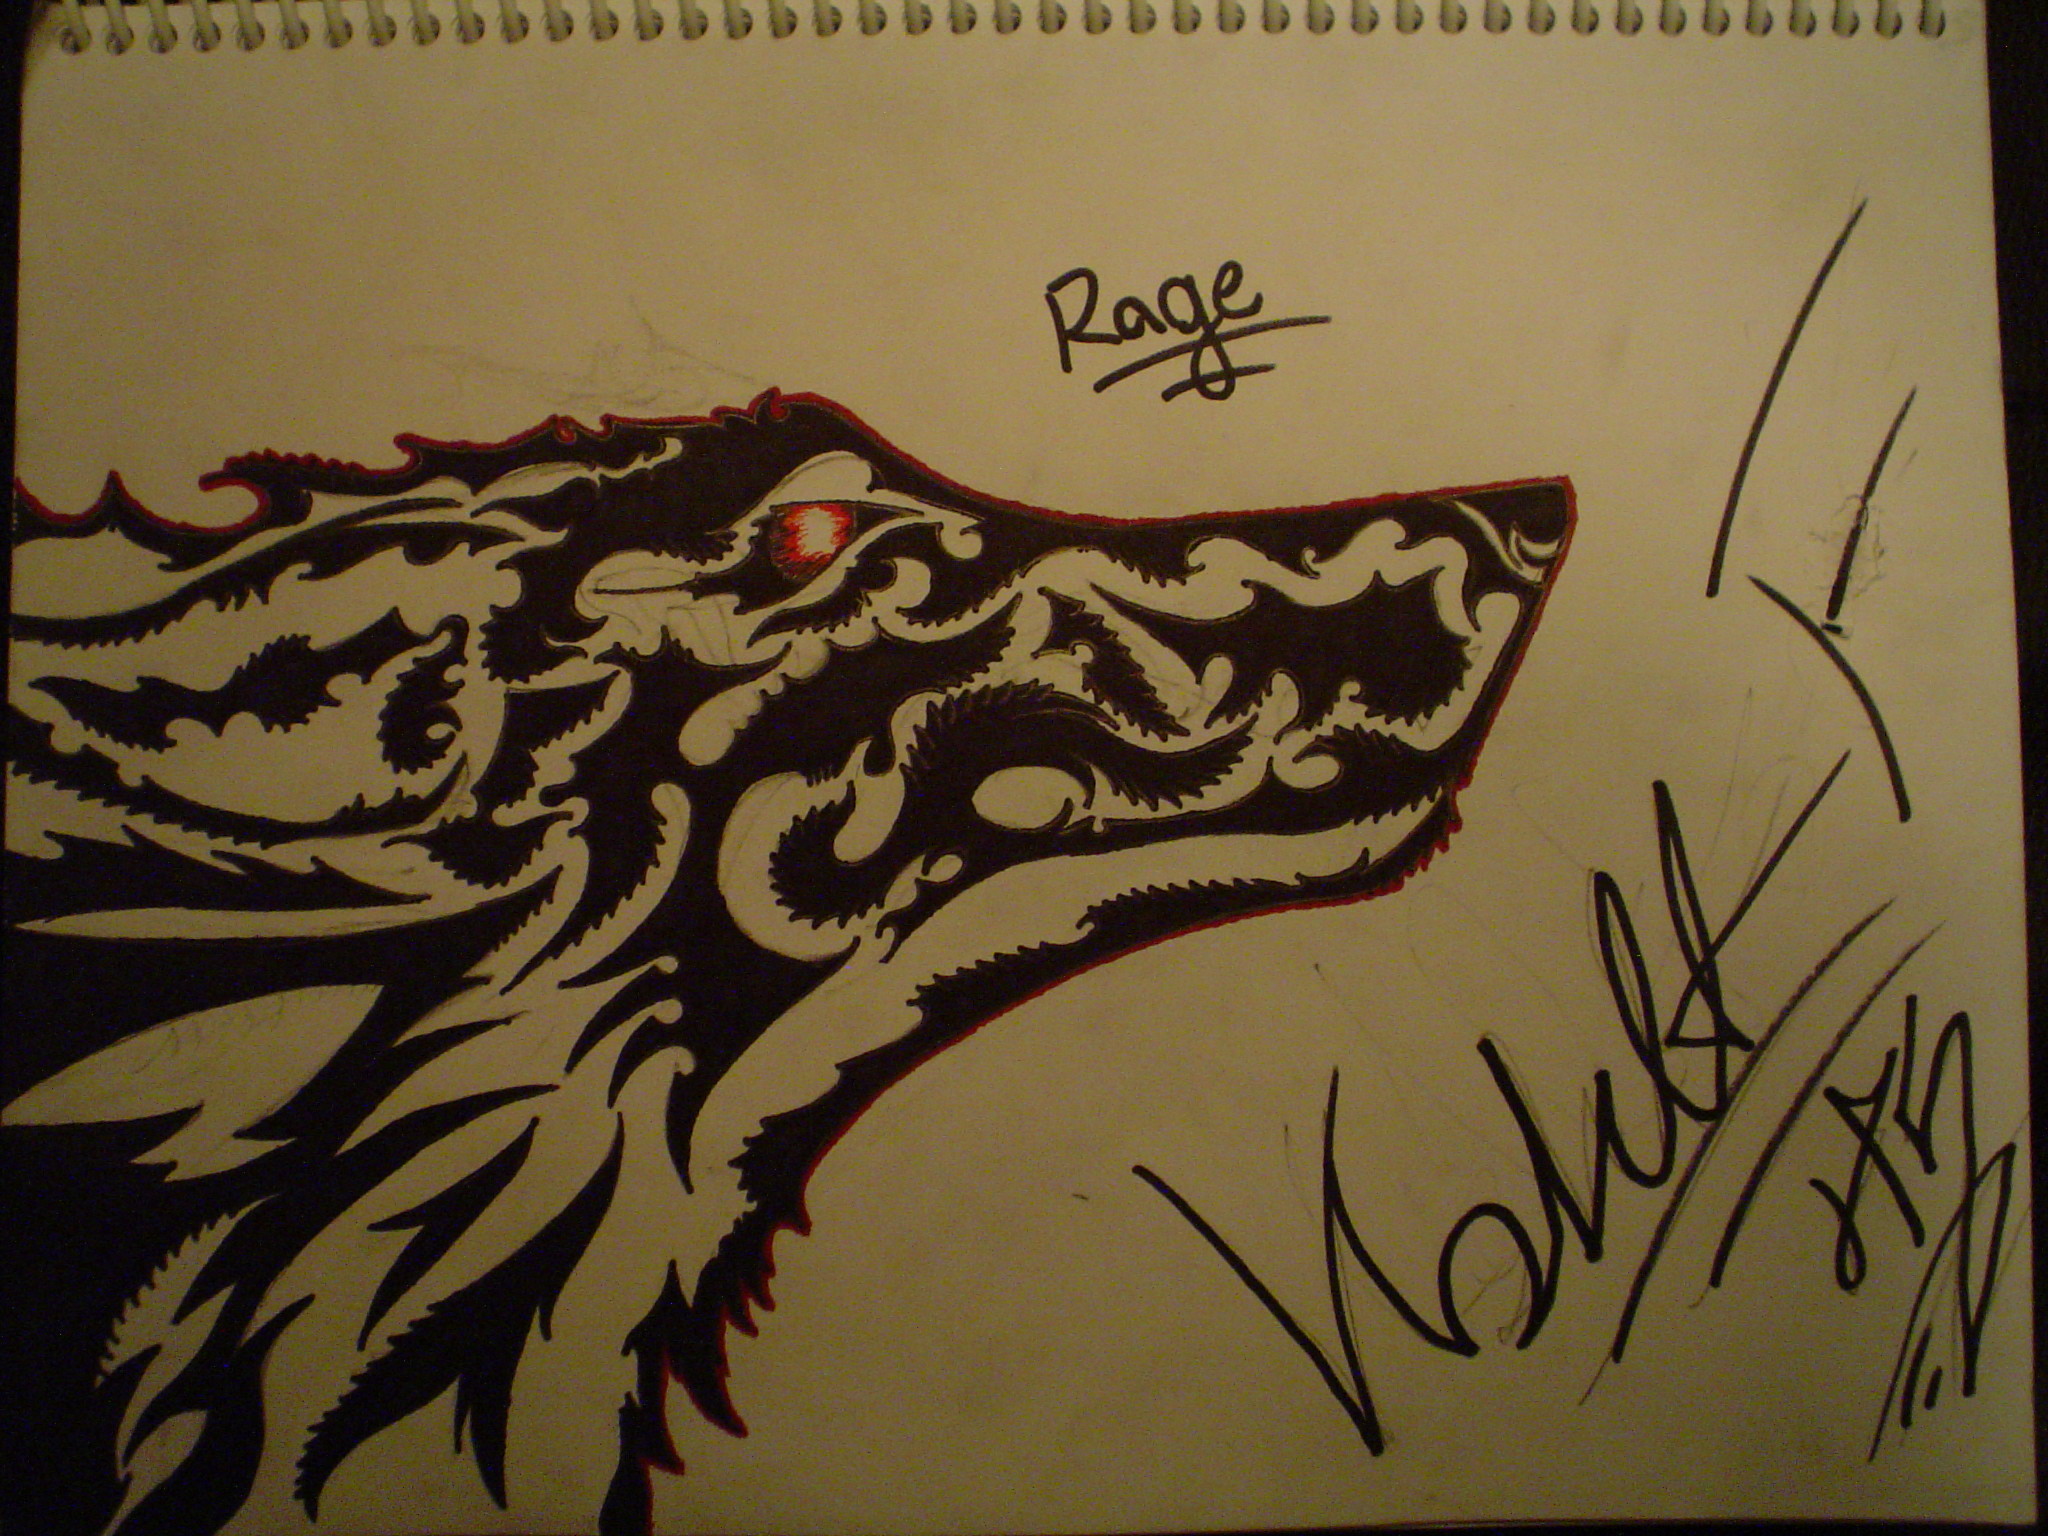 2048x1536 Rage tribal wolf by Crinickwolf Rage tribal wolf by Crinickwolf